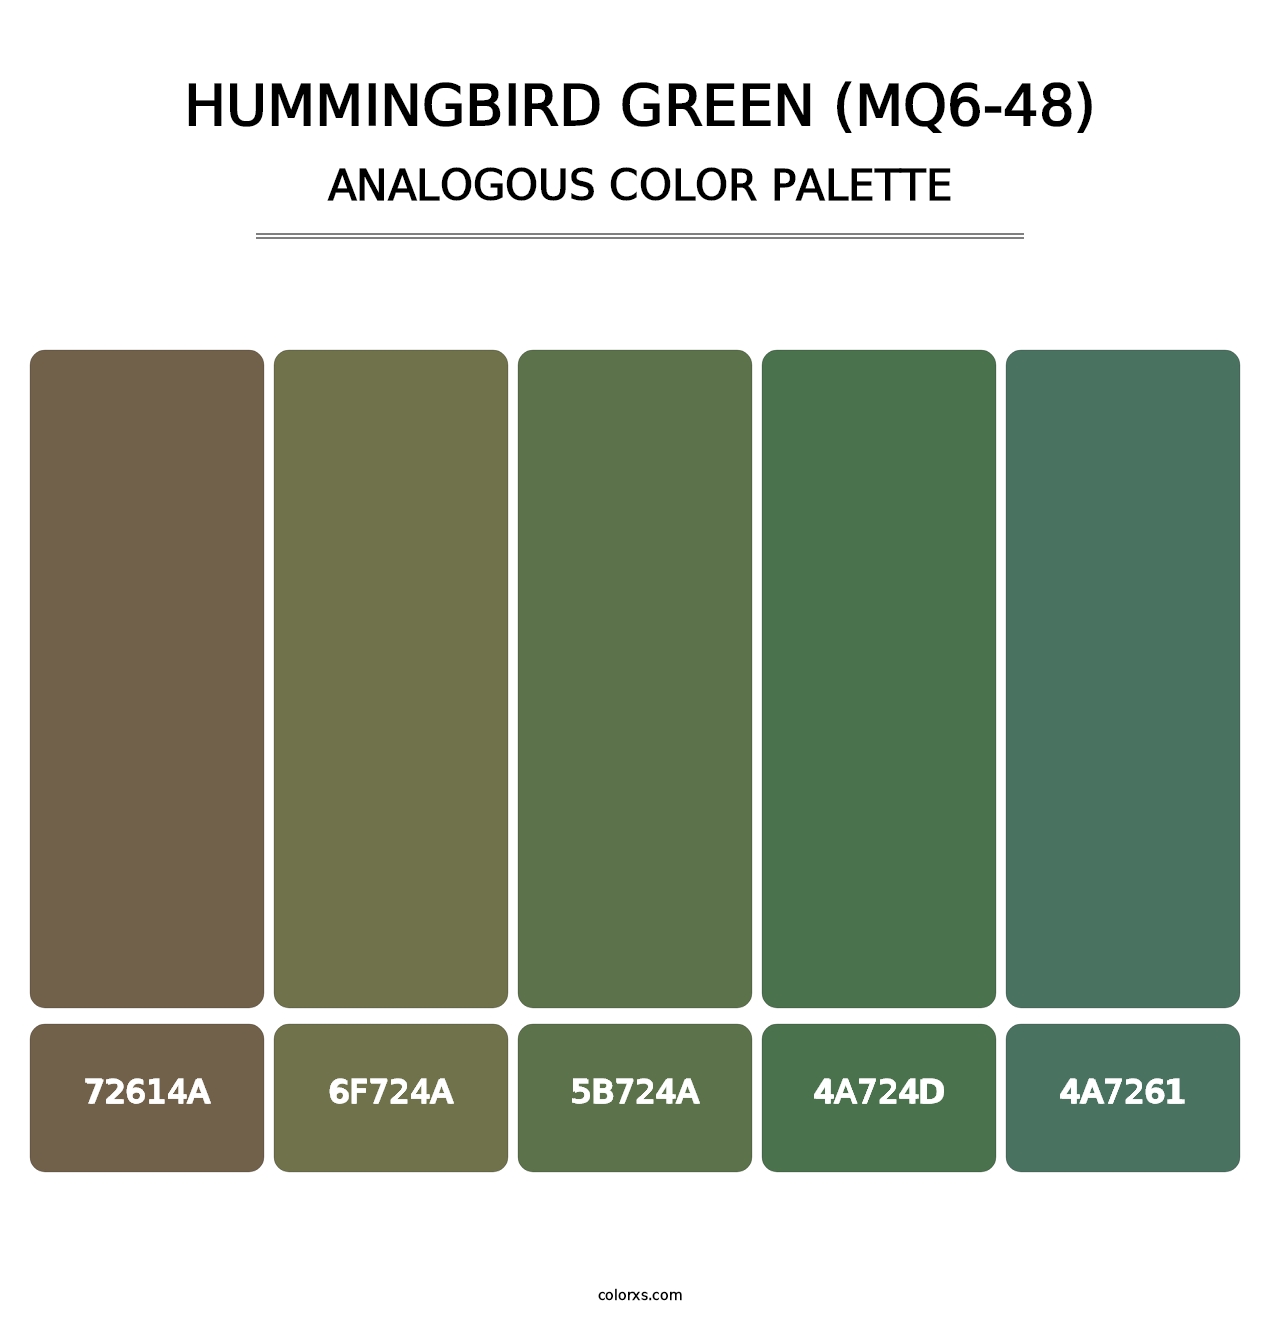 Hummingbird Green (MQ6-48) - Analogous Color Palette